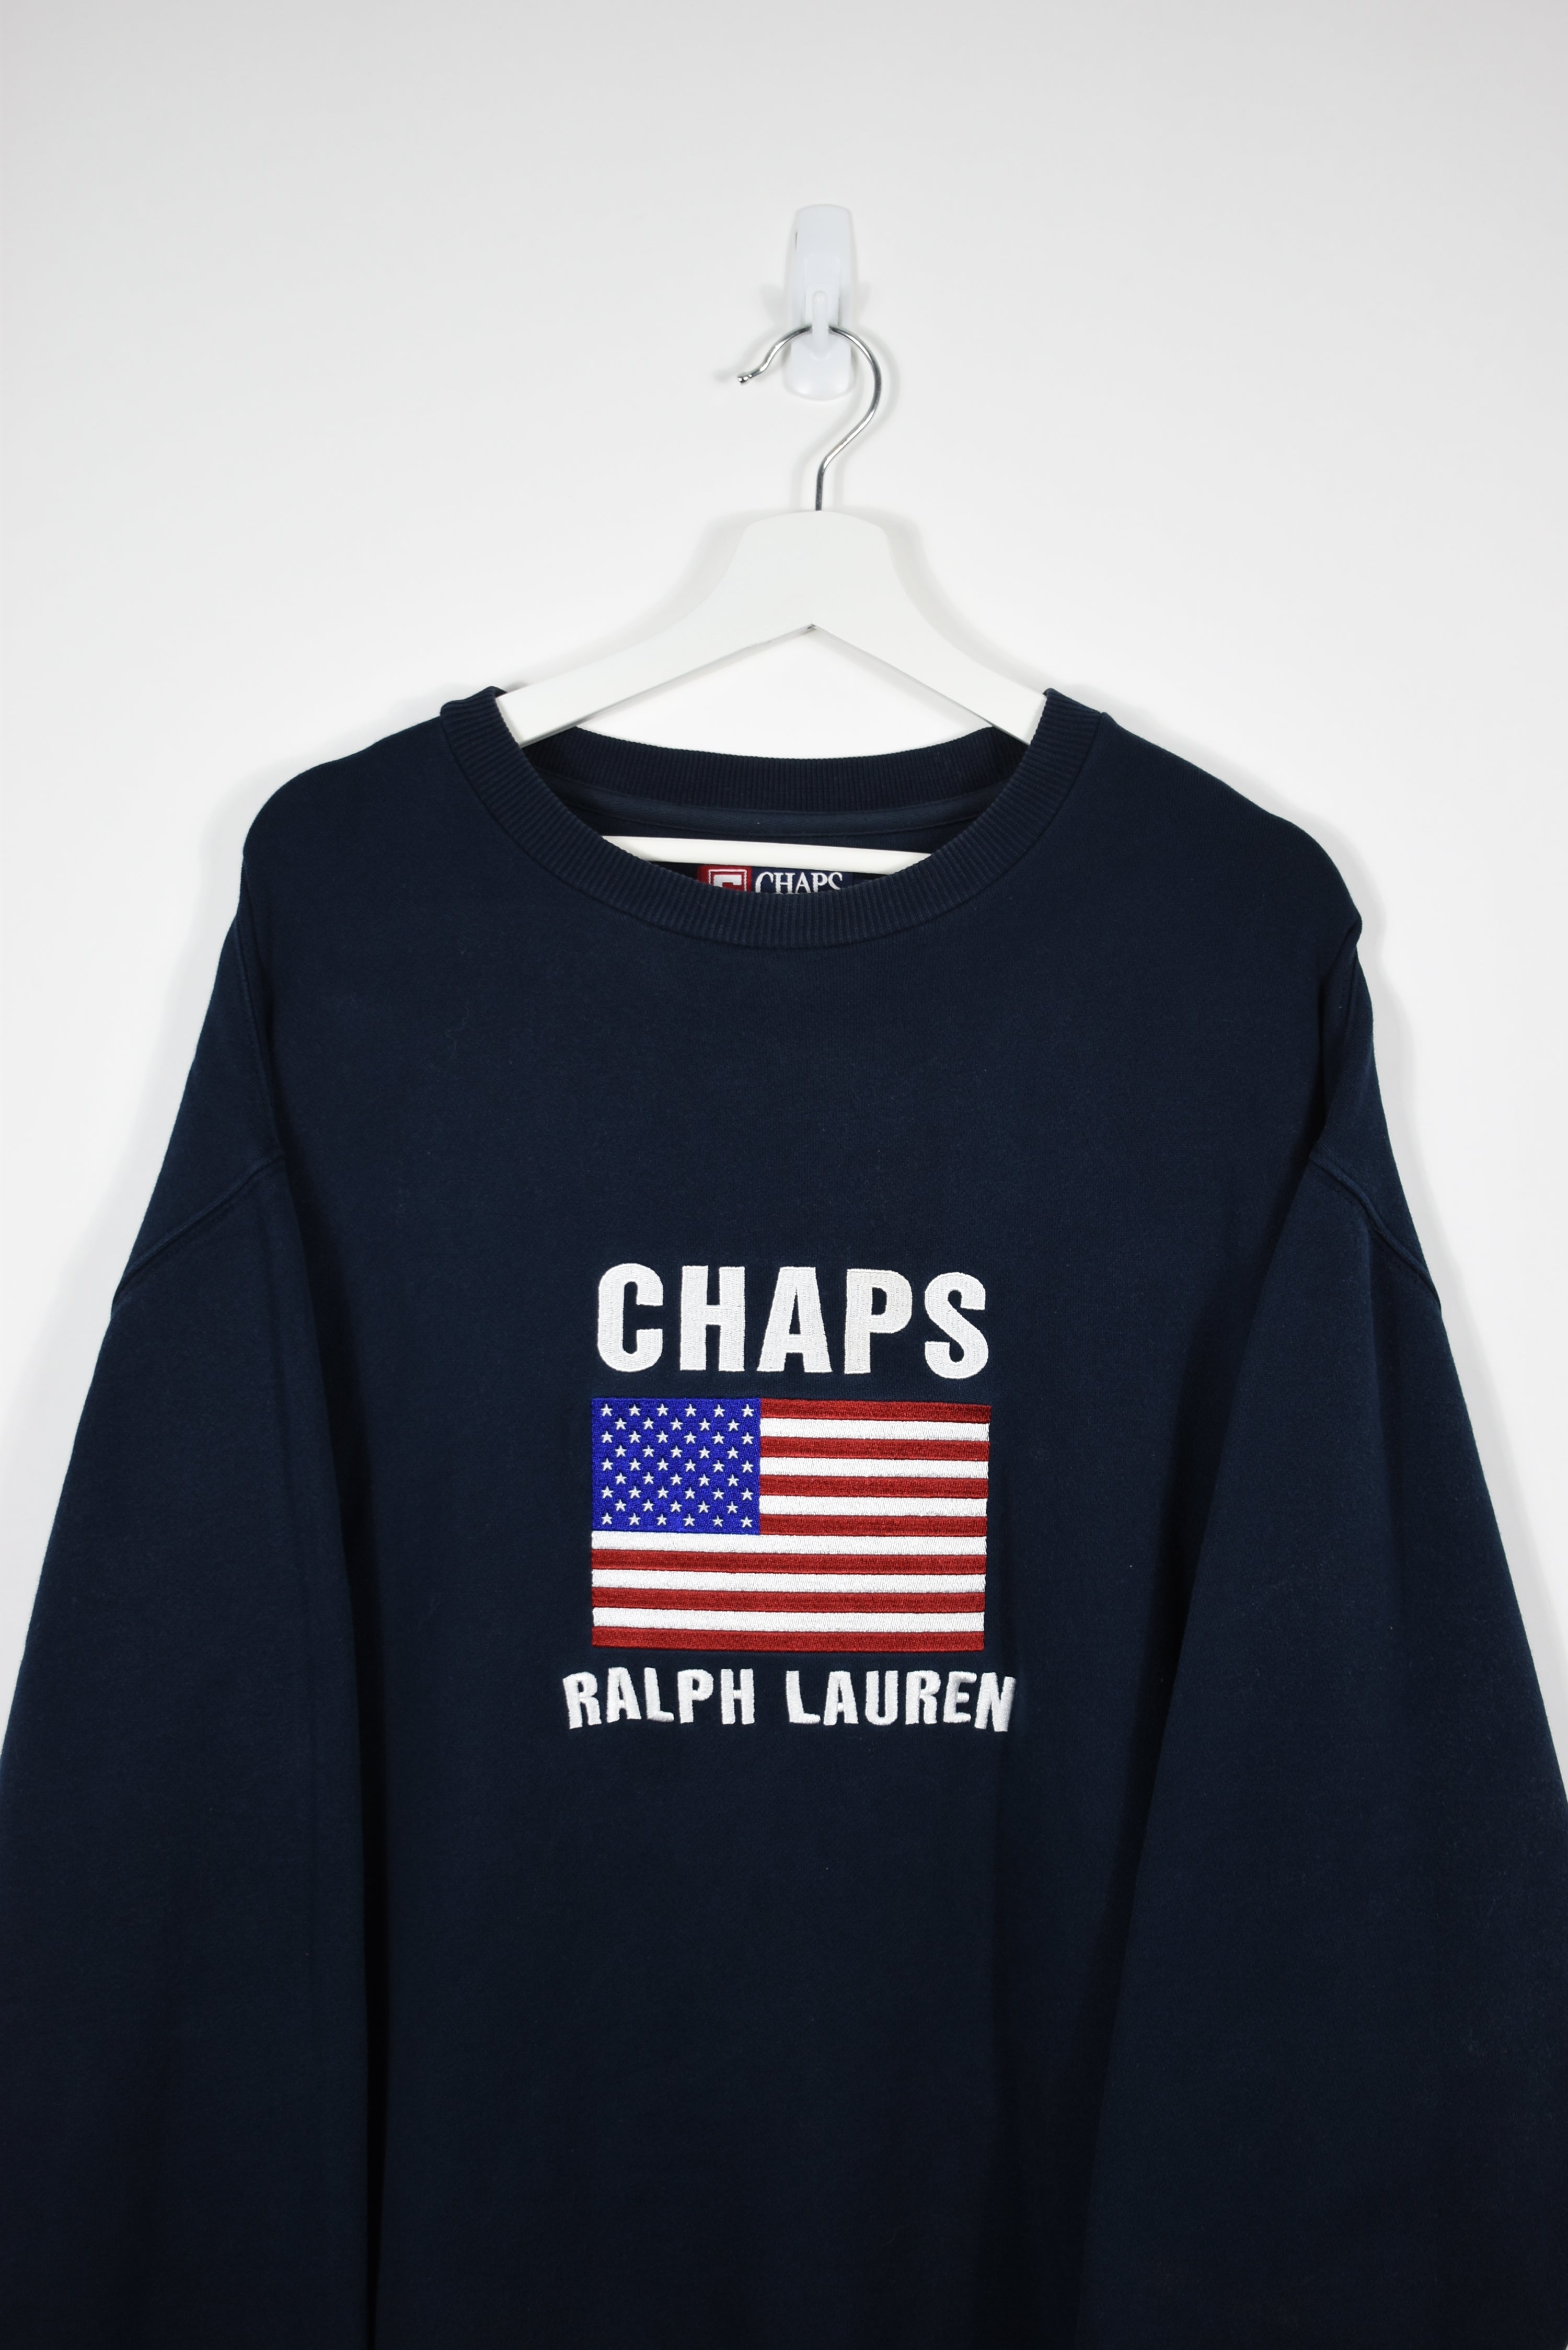 Vintage Chaps Ralph Lauren Embroidered Sweatshirt Xlarge